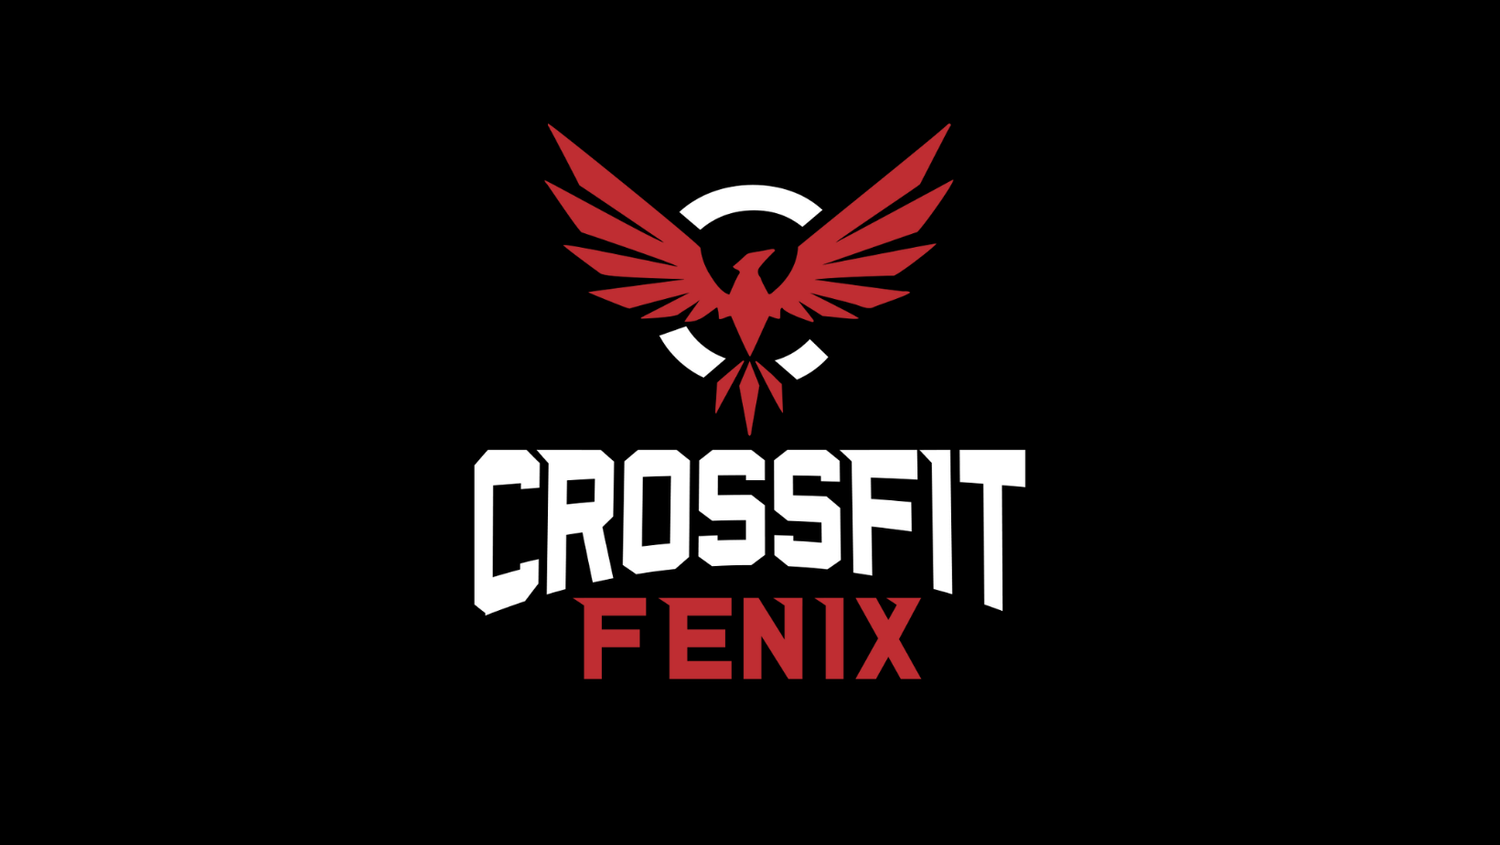 CrossFit Fenix